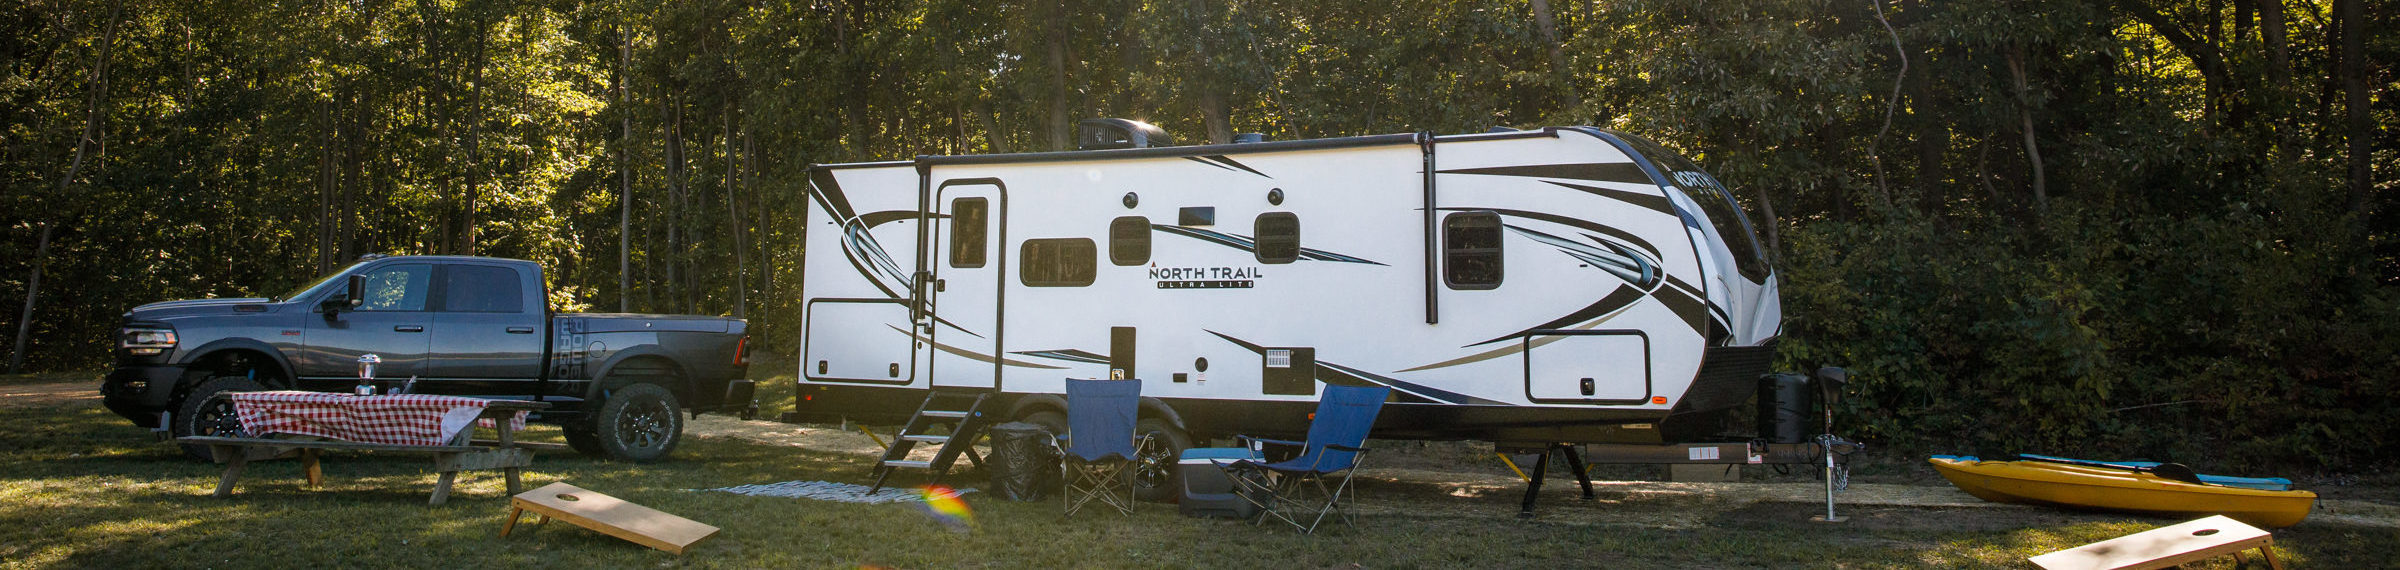 Heartland RV North Trail on Scenic Wooded Campsite